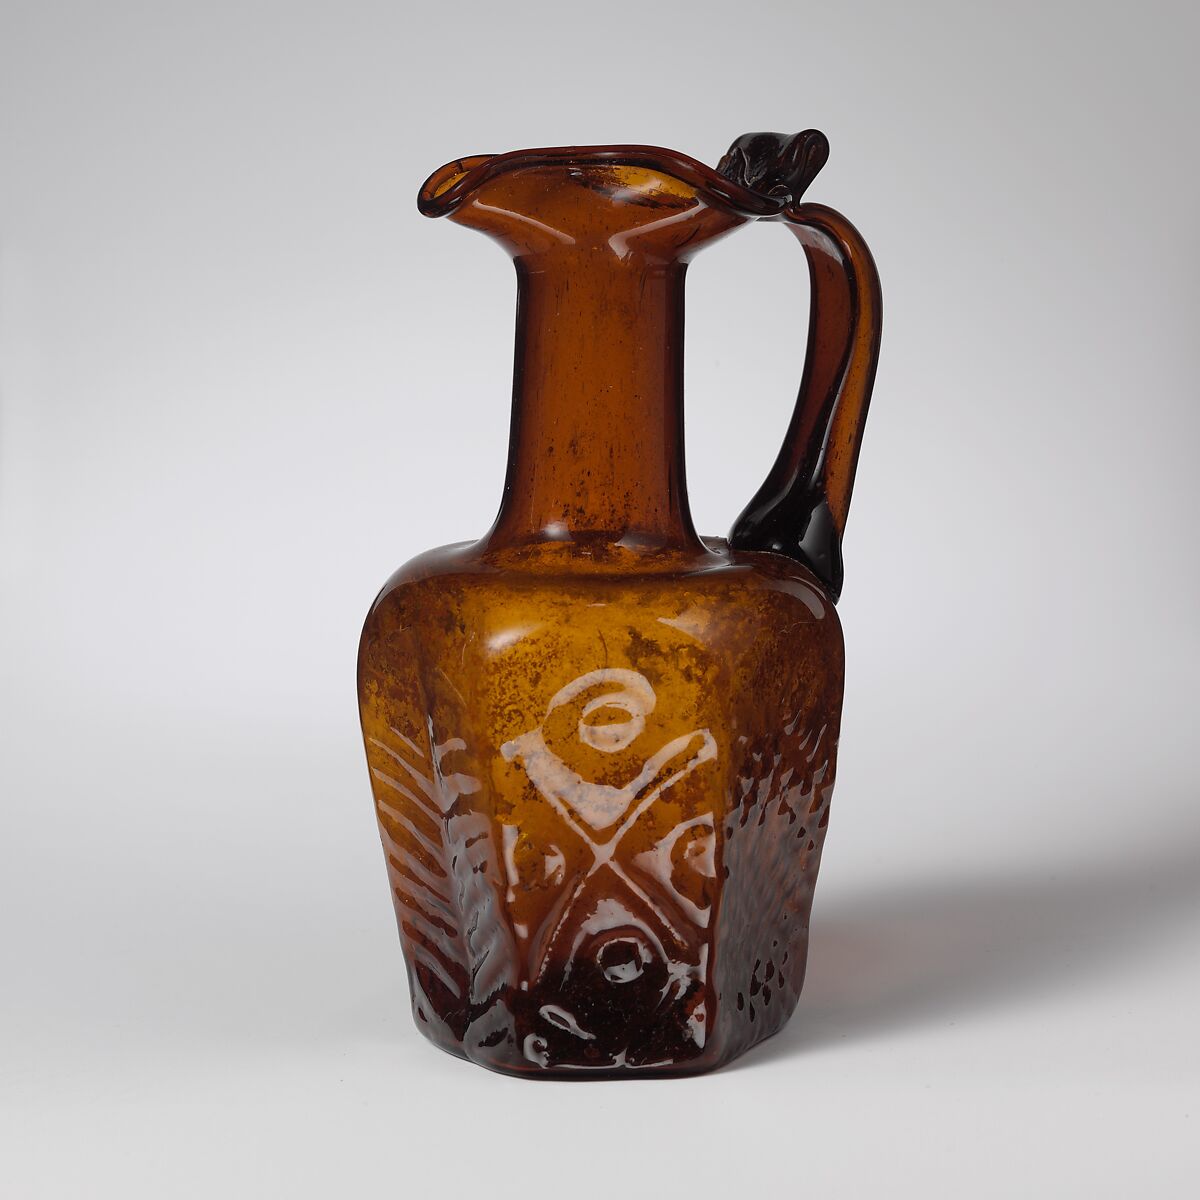 Glass hexagonal jug, Glass, Roman, Palestinian 